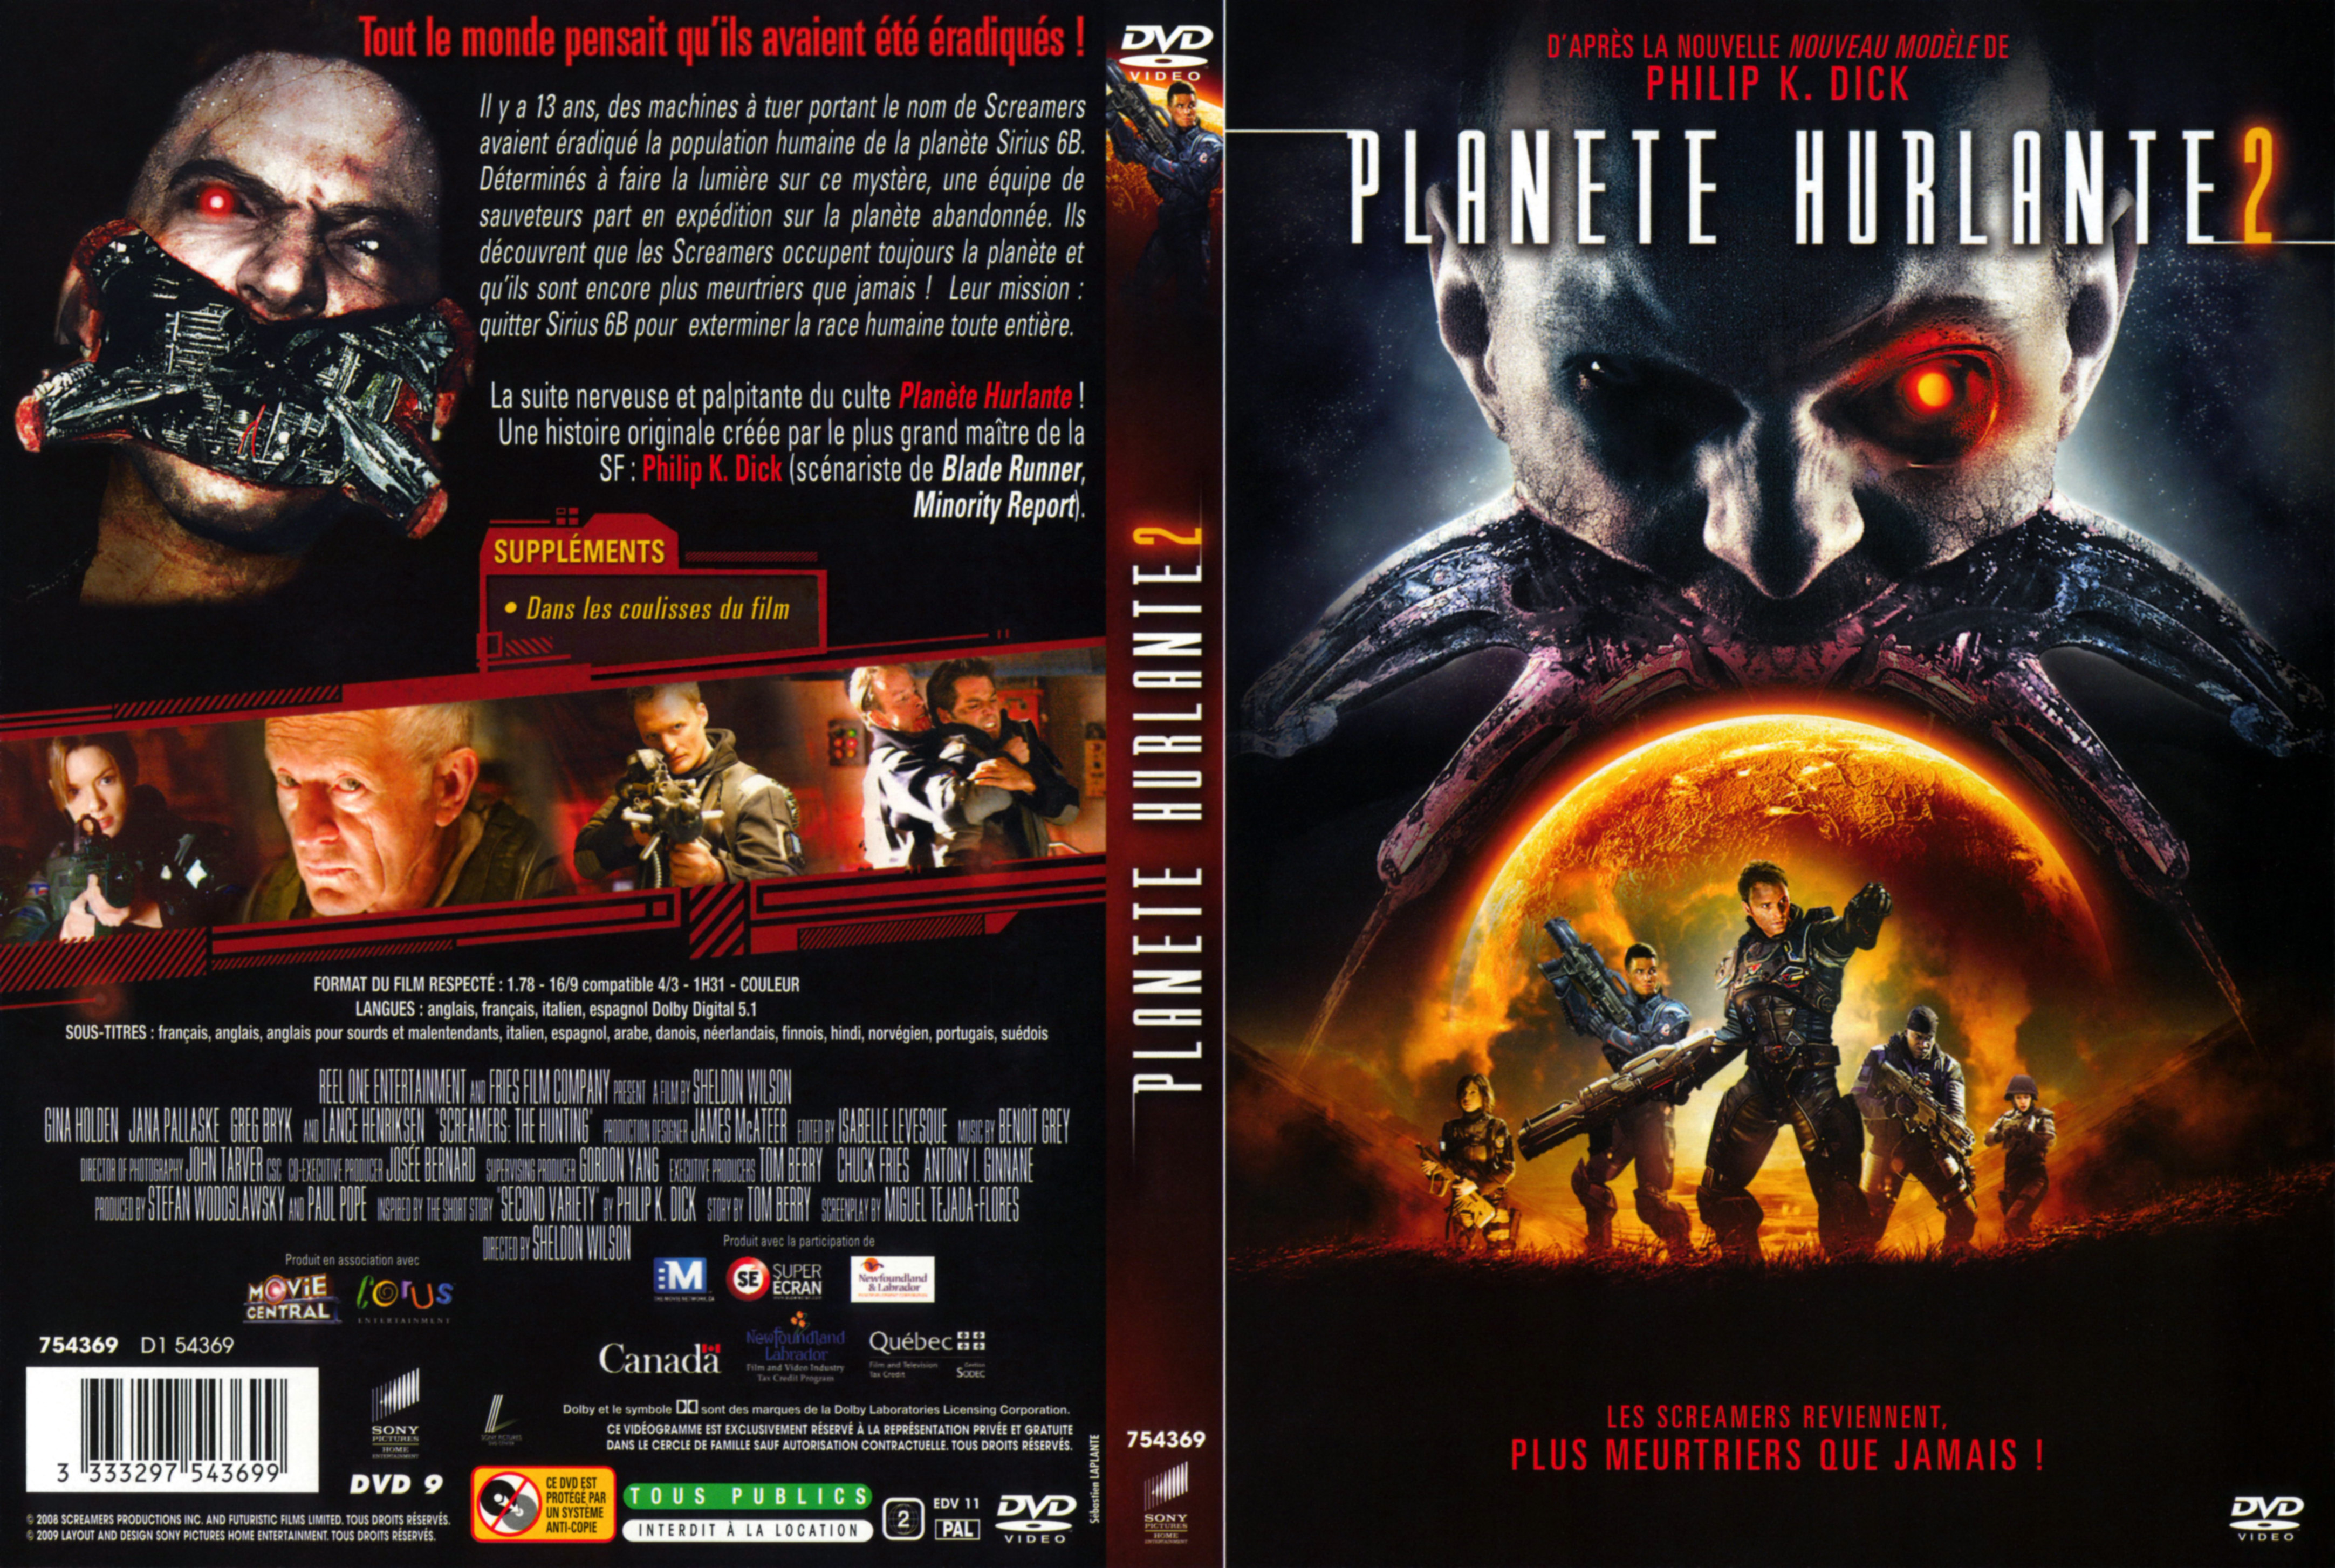 Jaquette DVD Planete hurlante 2